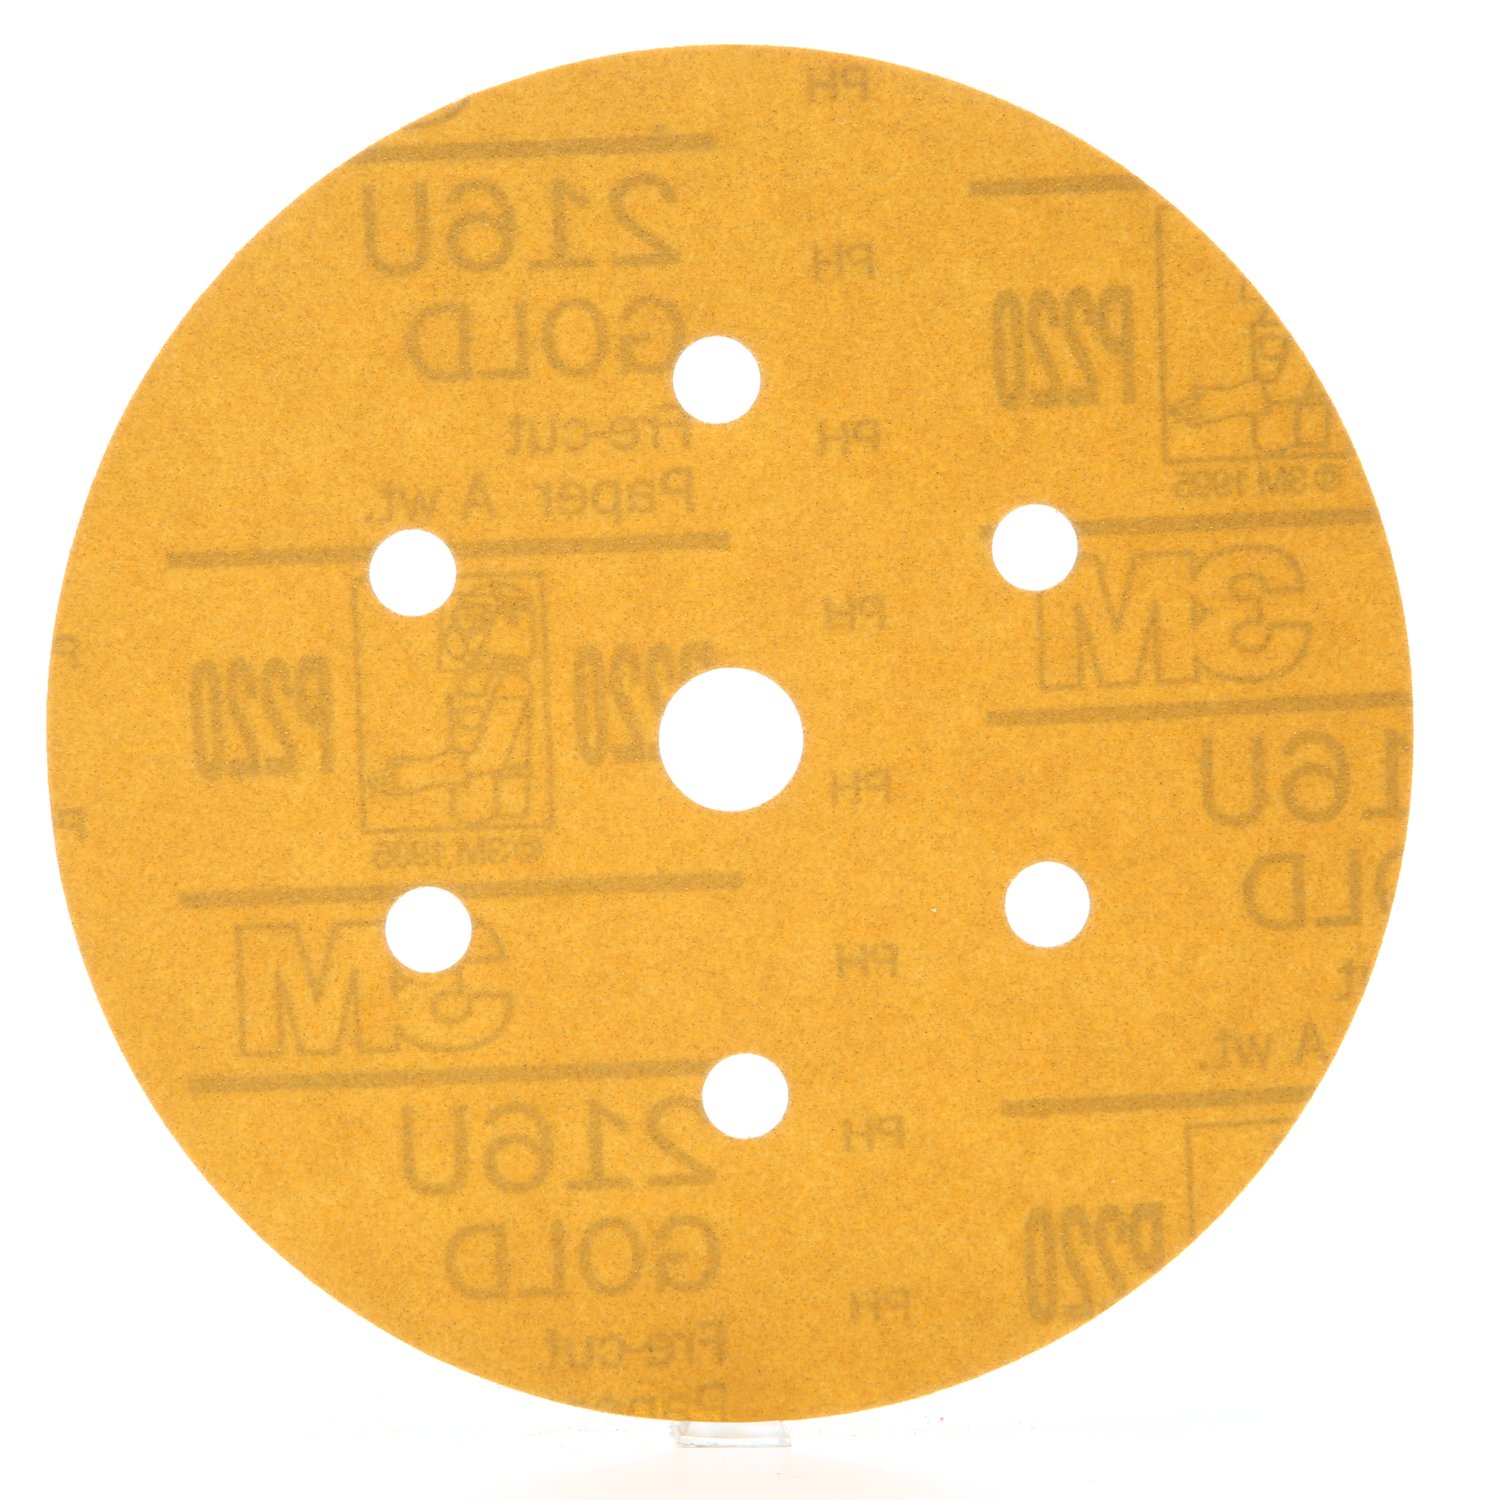 7000119698 - 3M Hookit Gold Disc Dust Free 216U 01078, 6 in, P220, 100 Discs/Carton, 4 Cartons/Case